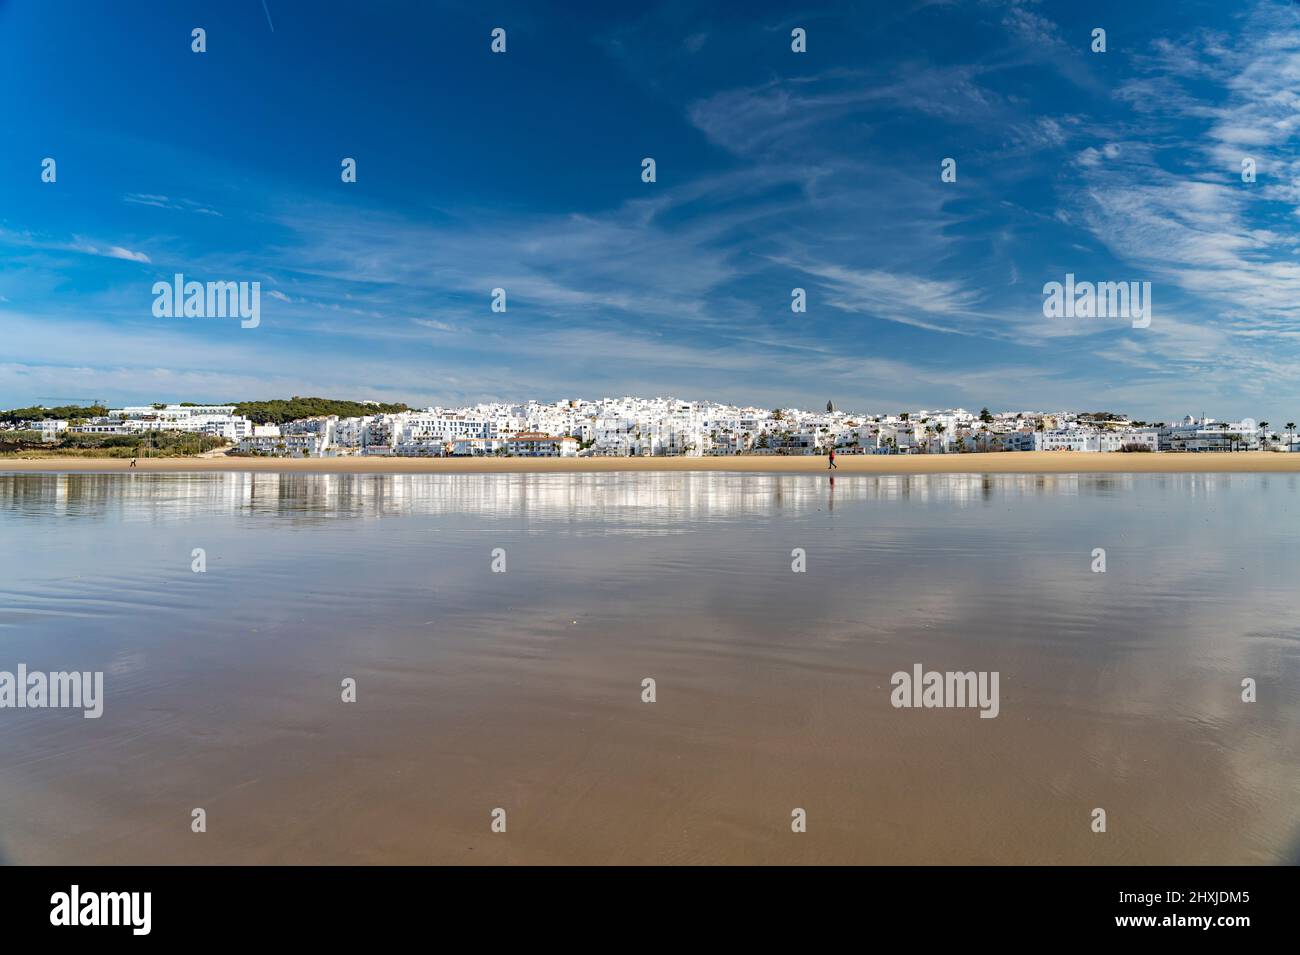 Die Stadtansicht von Conil spiegelt sich am Strand Playa De Los Bateles, Conil de la Frontera, Costa de la Luz, Andalusien, Spanien | Conil cityscap Stockfoto